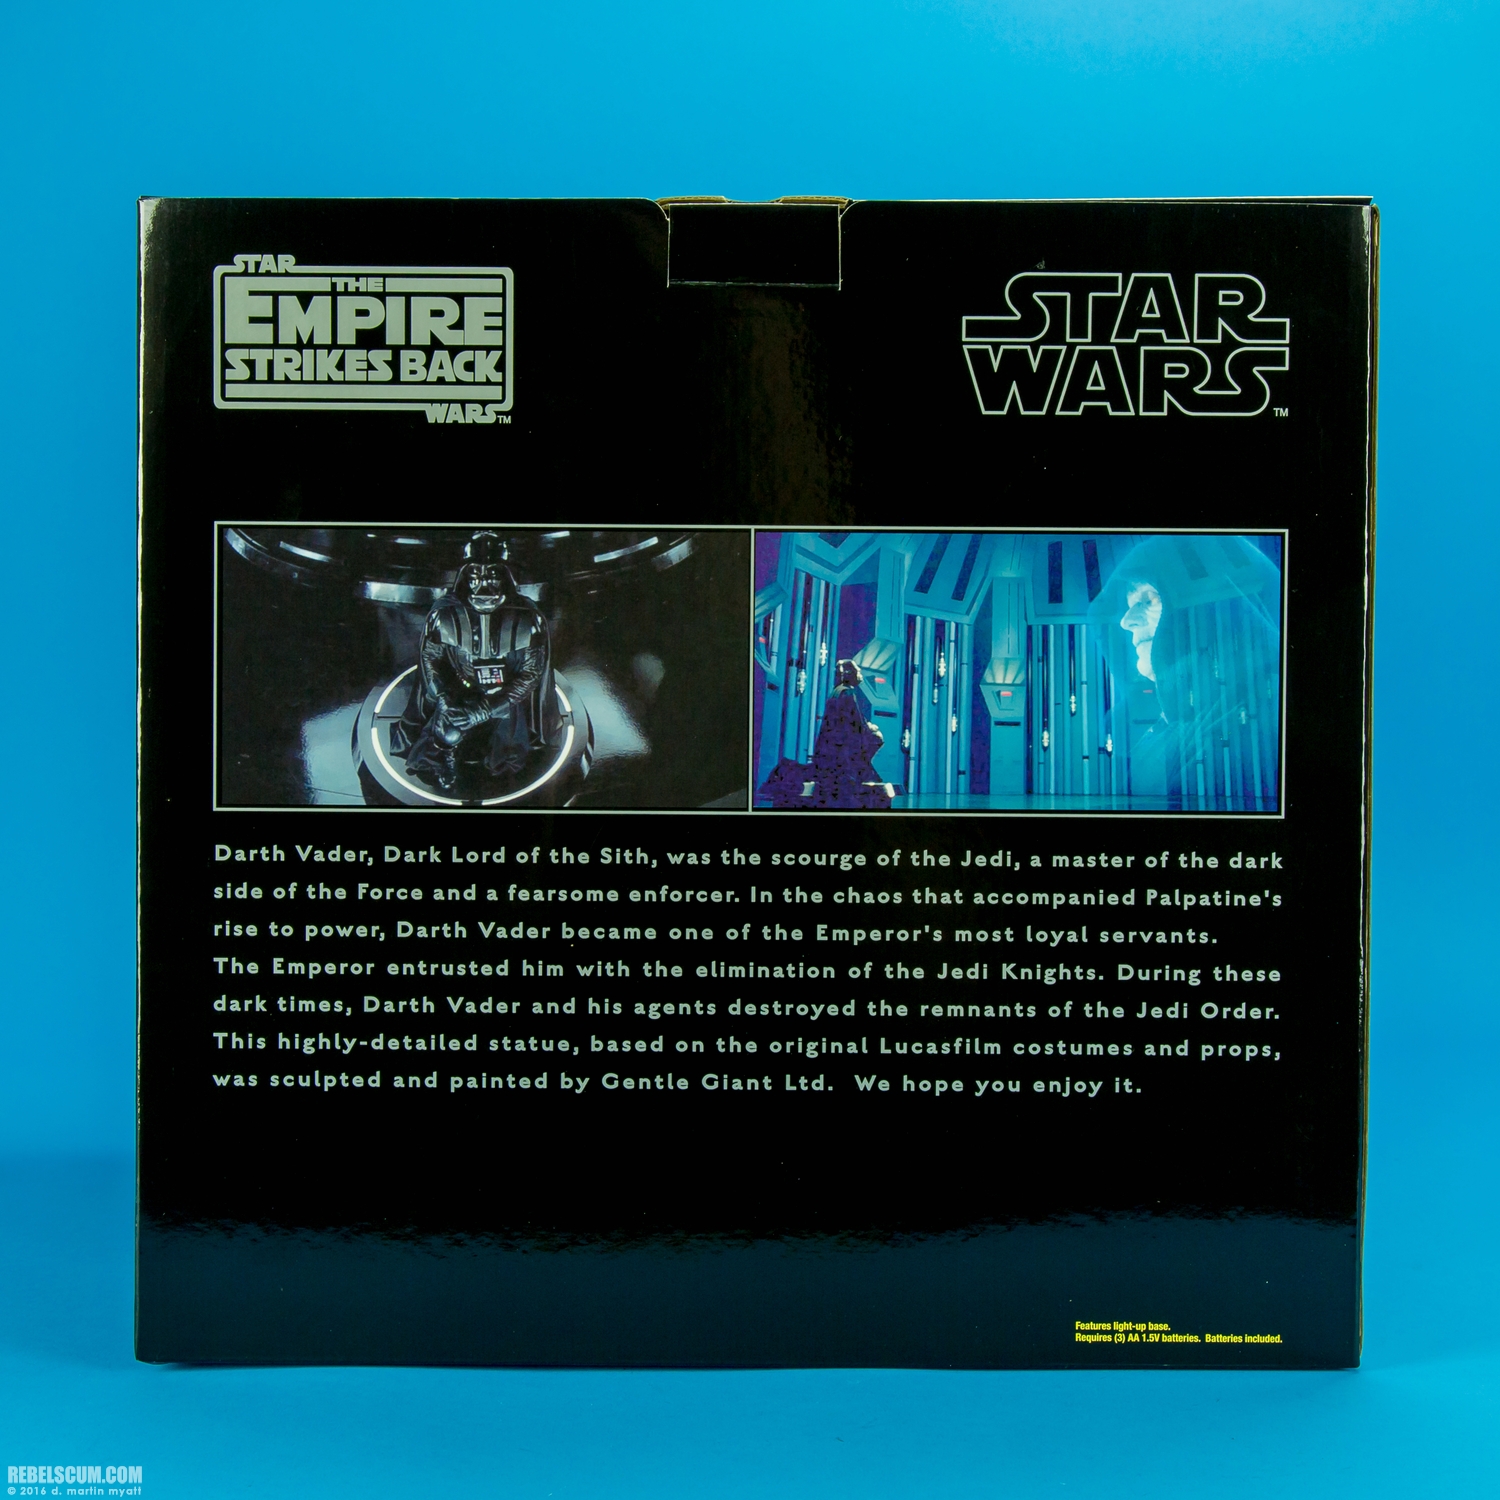 Darth-Vader-Kneeling-Statue-Gentle-Giant-Ltd-Star-Wars-018.jpg